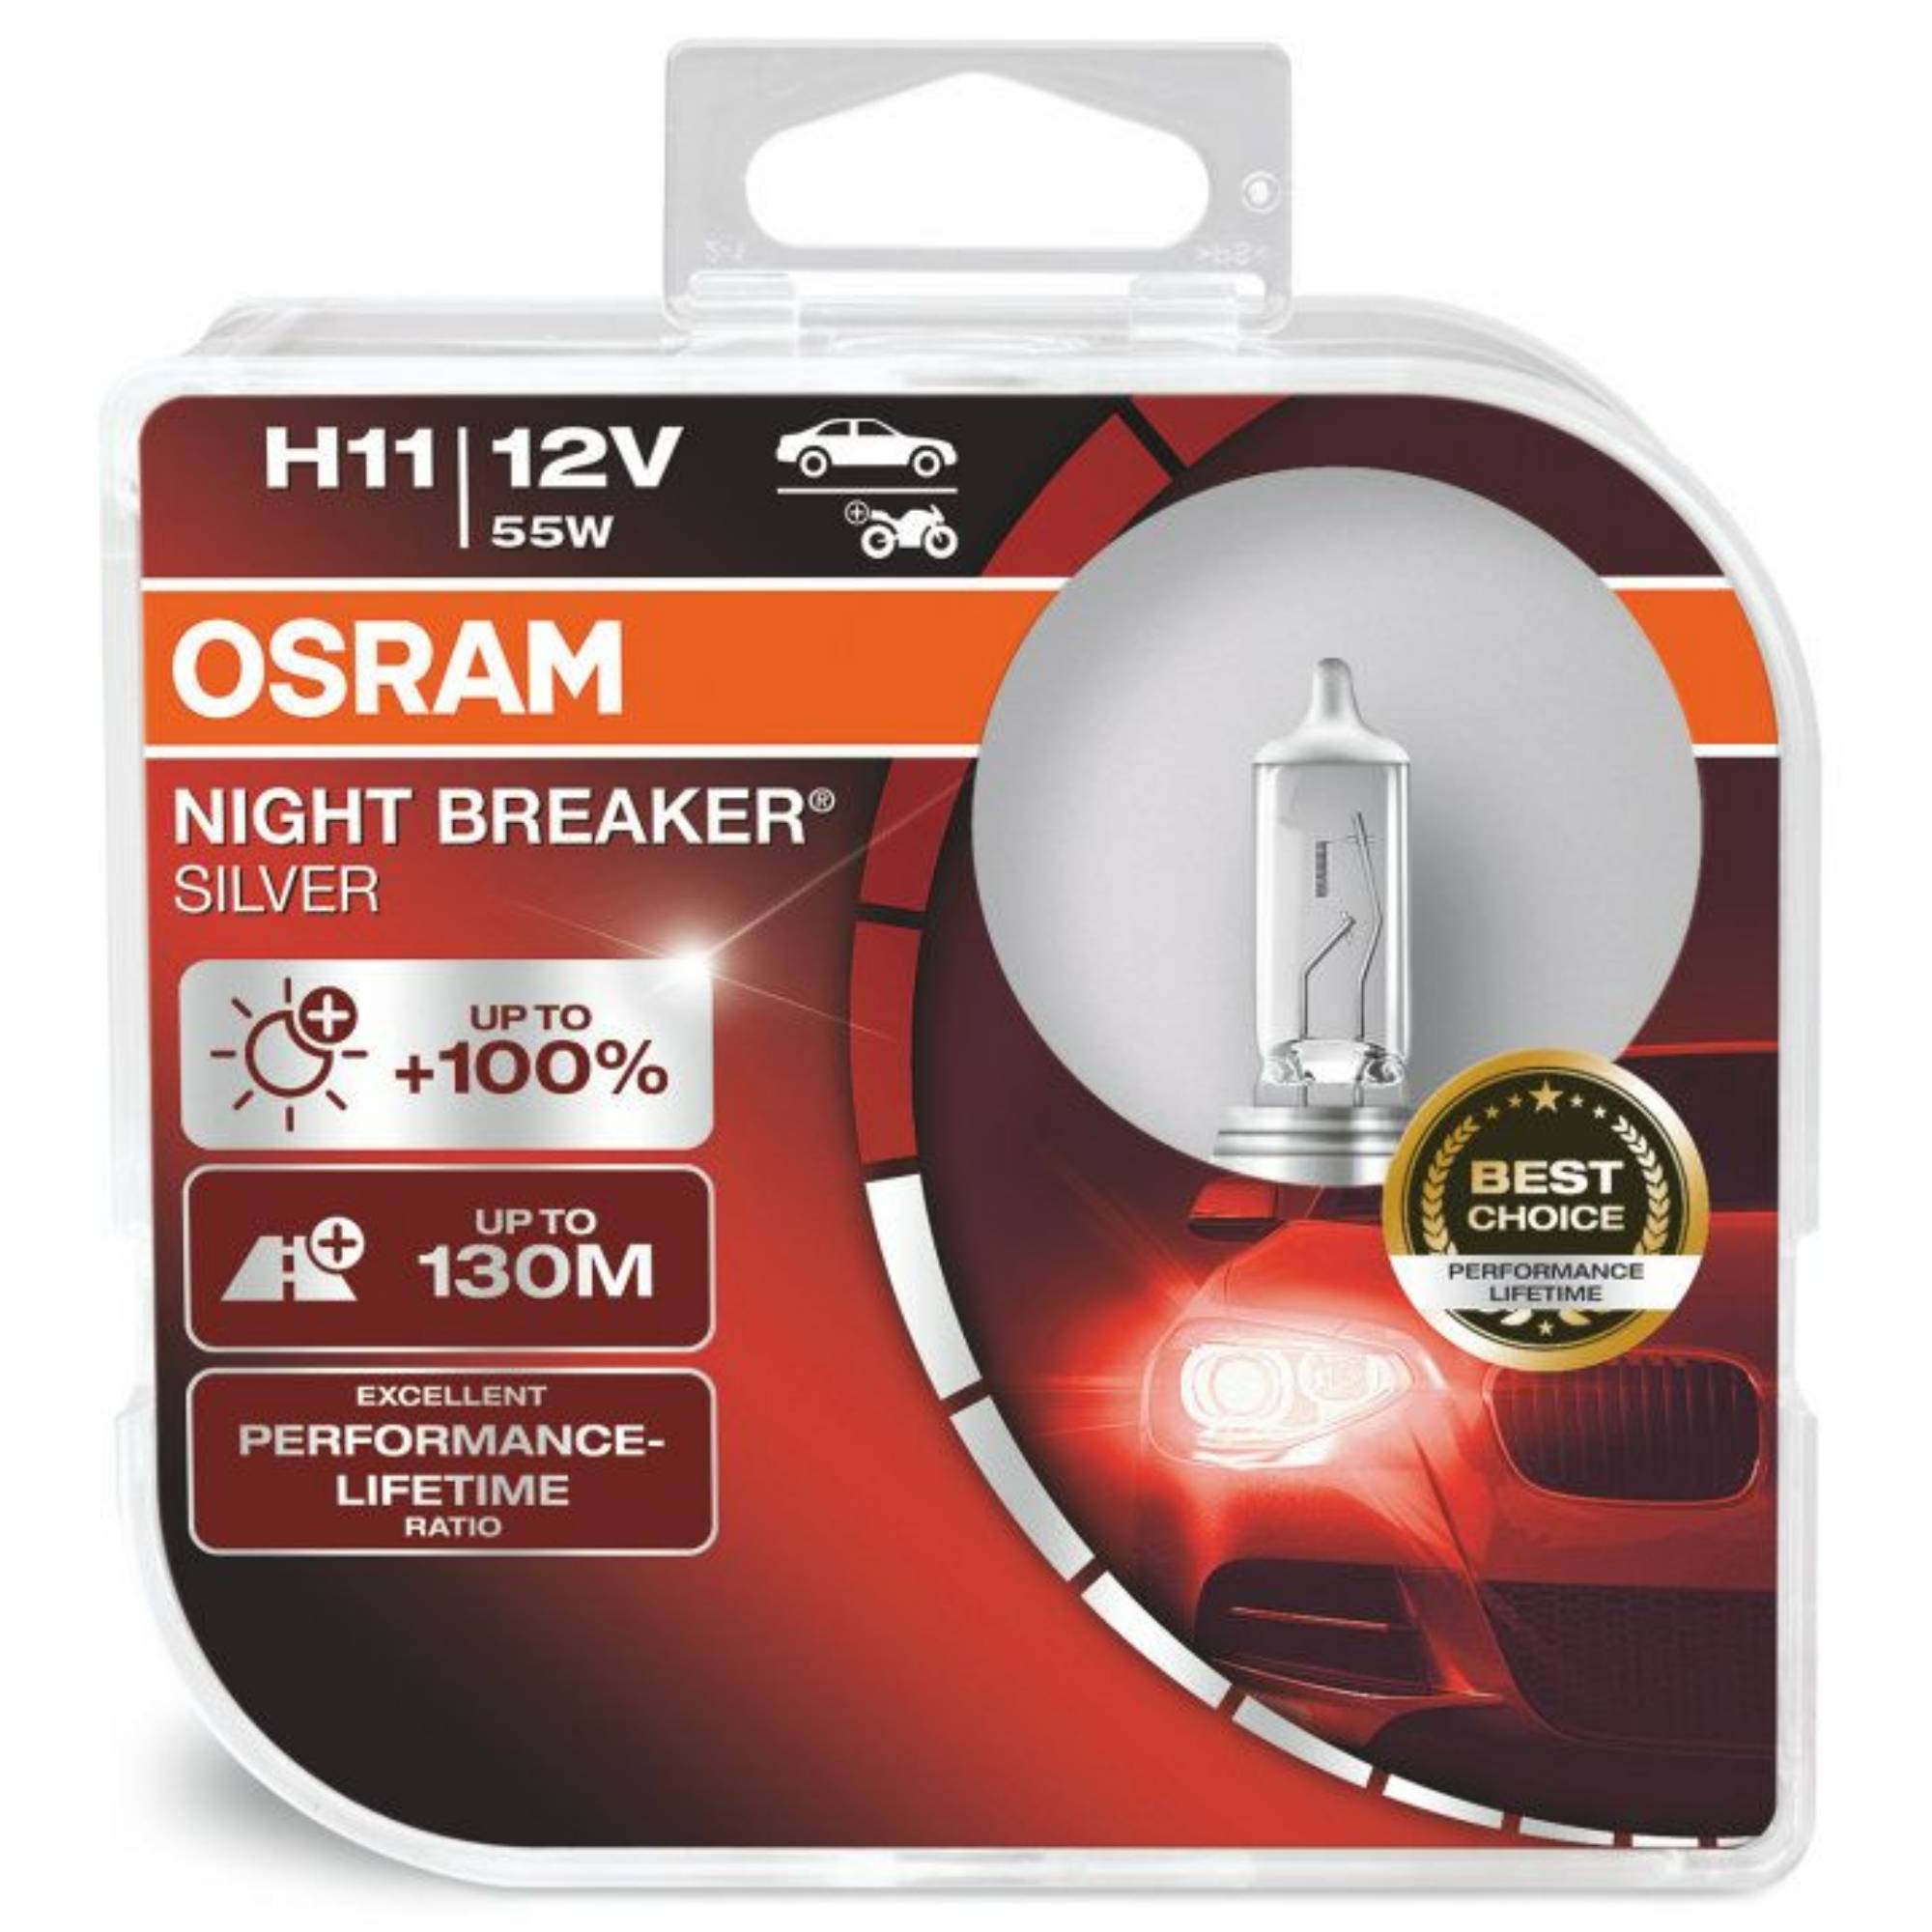 Osram H11 12V 55W Night Breaker Silver Twin Pack